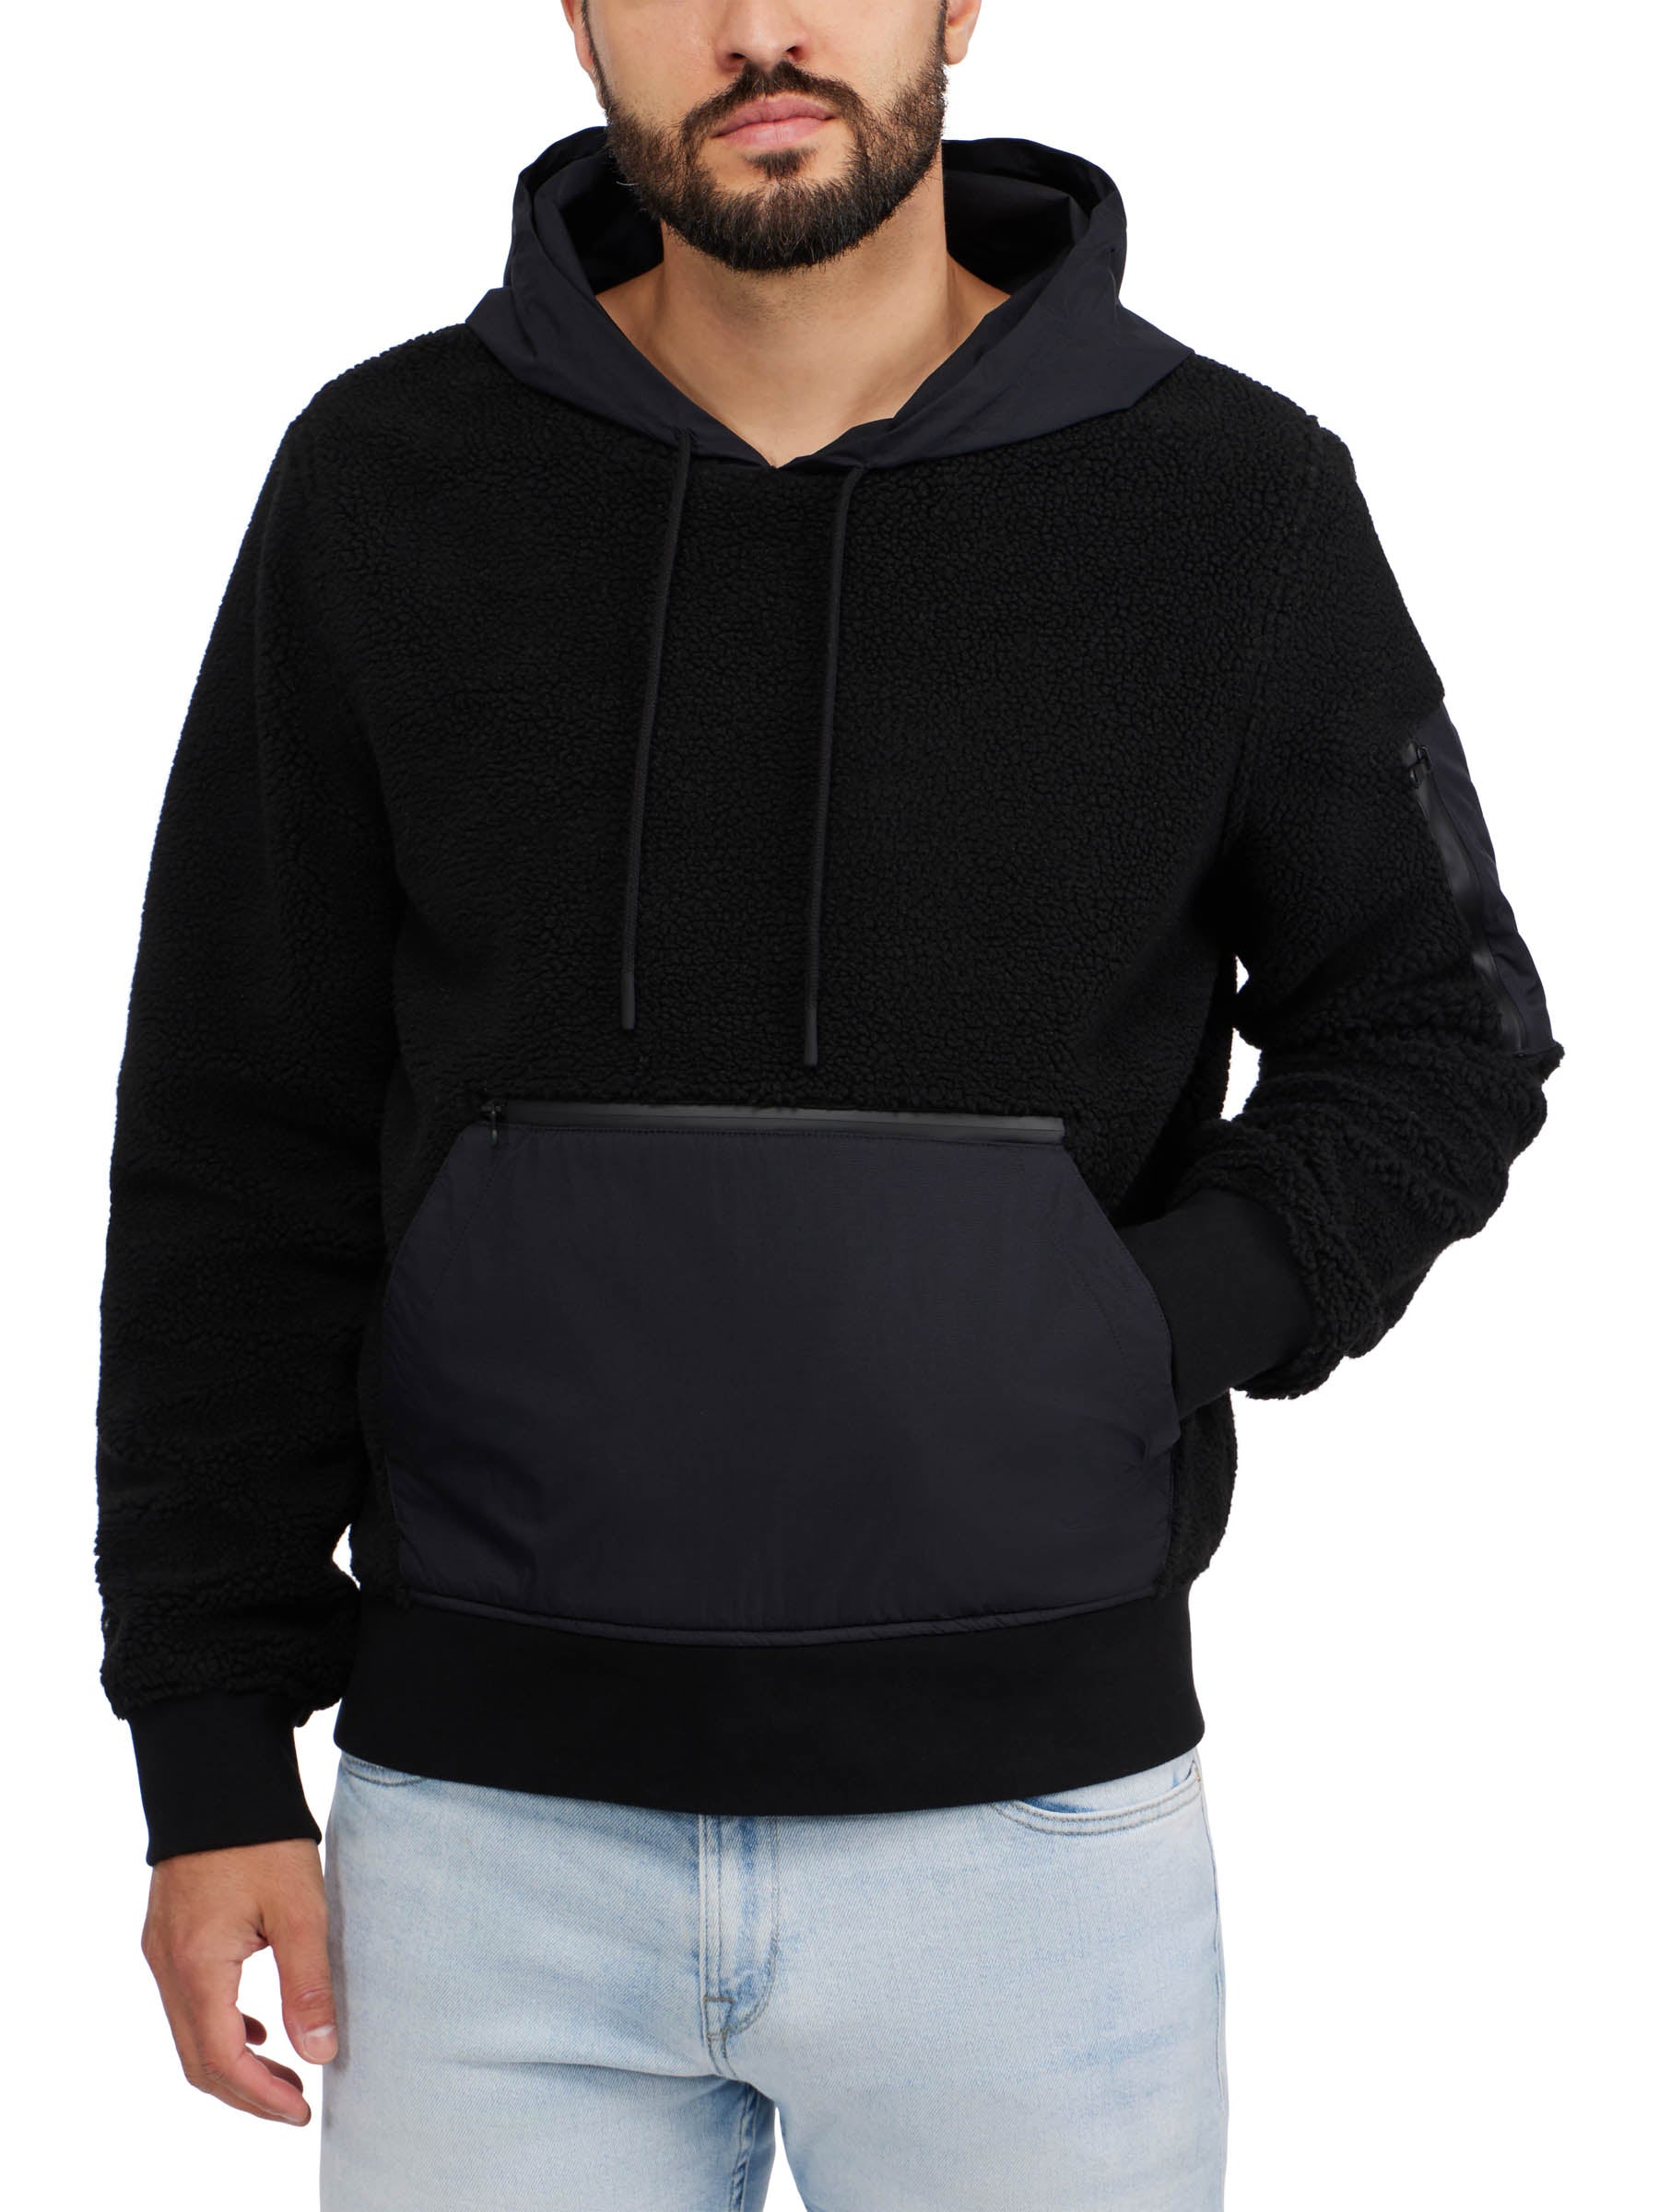 AMDBEL Sherpa Lined Hoodies for Men Sweatshirts for Men Mens Cowboy  Sweatshirts Vintage Enthic Print Western Tops Long Sleeve 1/4 Zip Fleece  Pullover